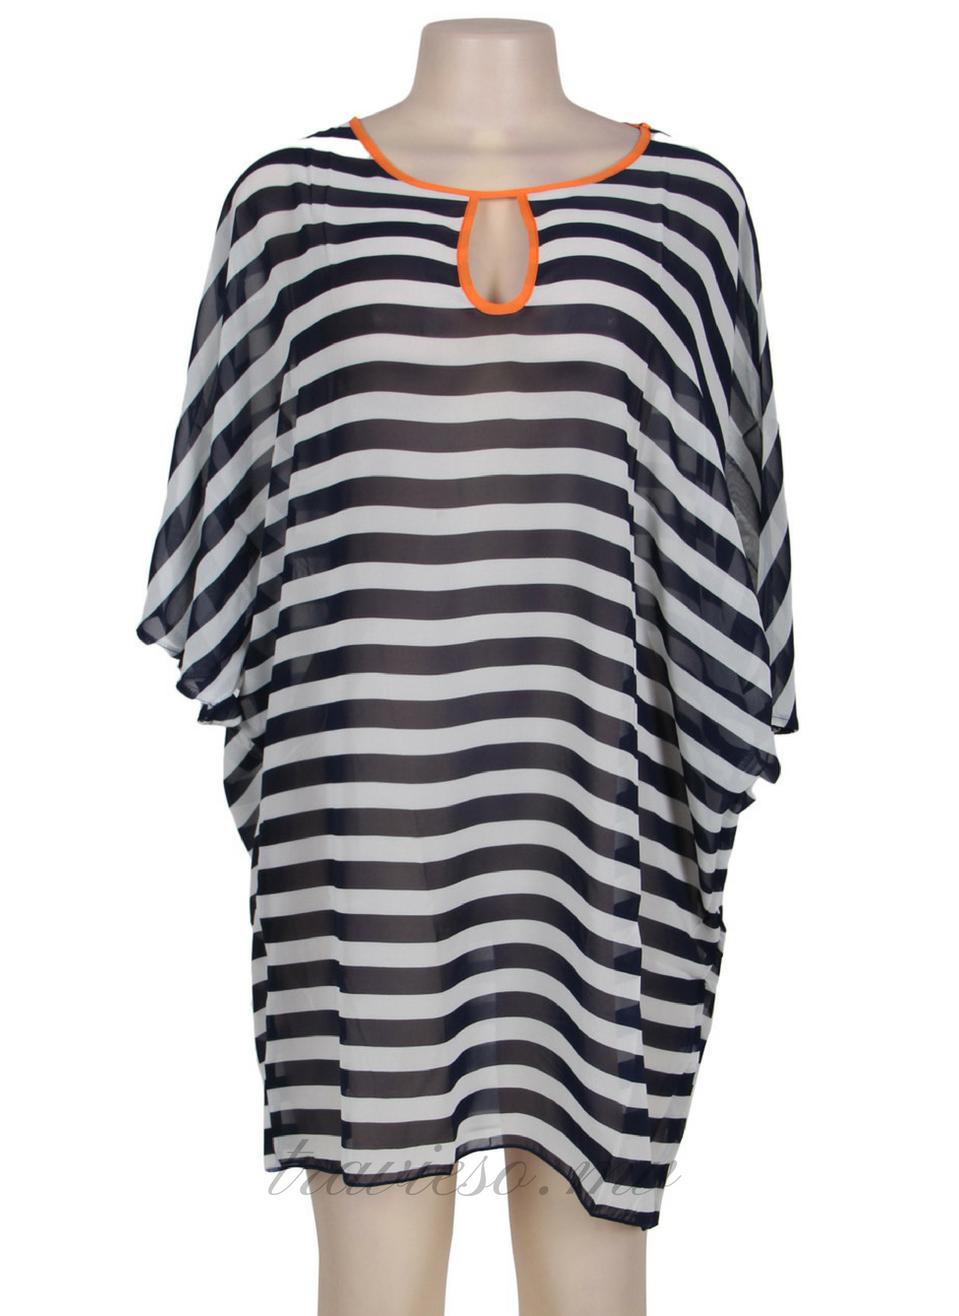 Kimono Sleeve Chiffon Striped Beachwear - travieso.mv